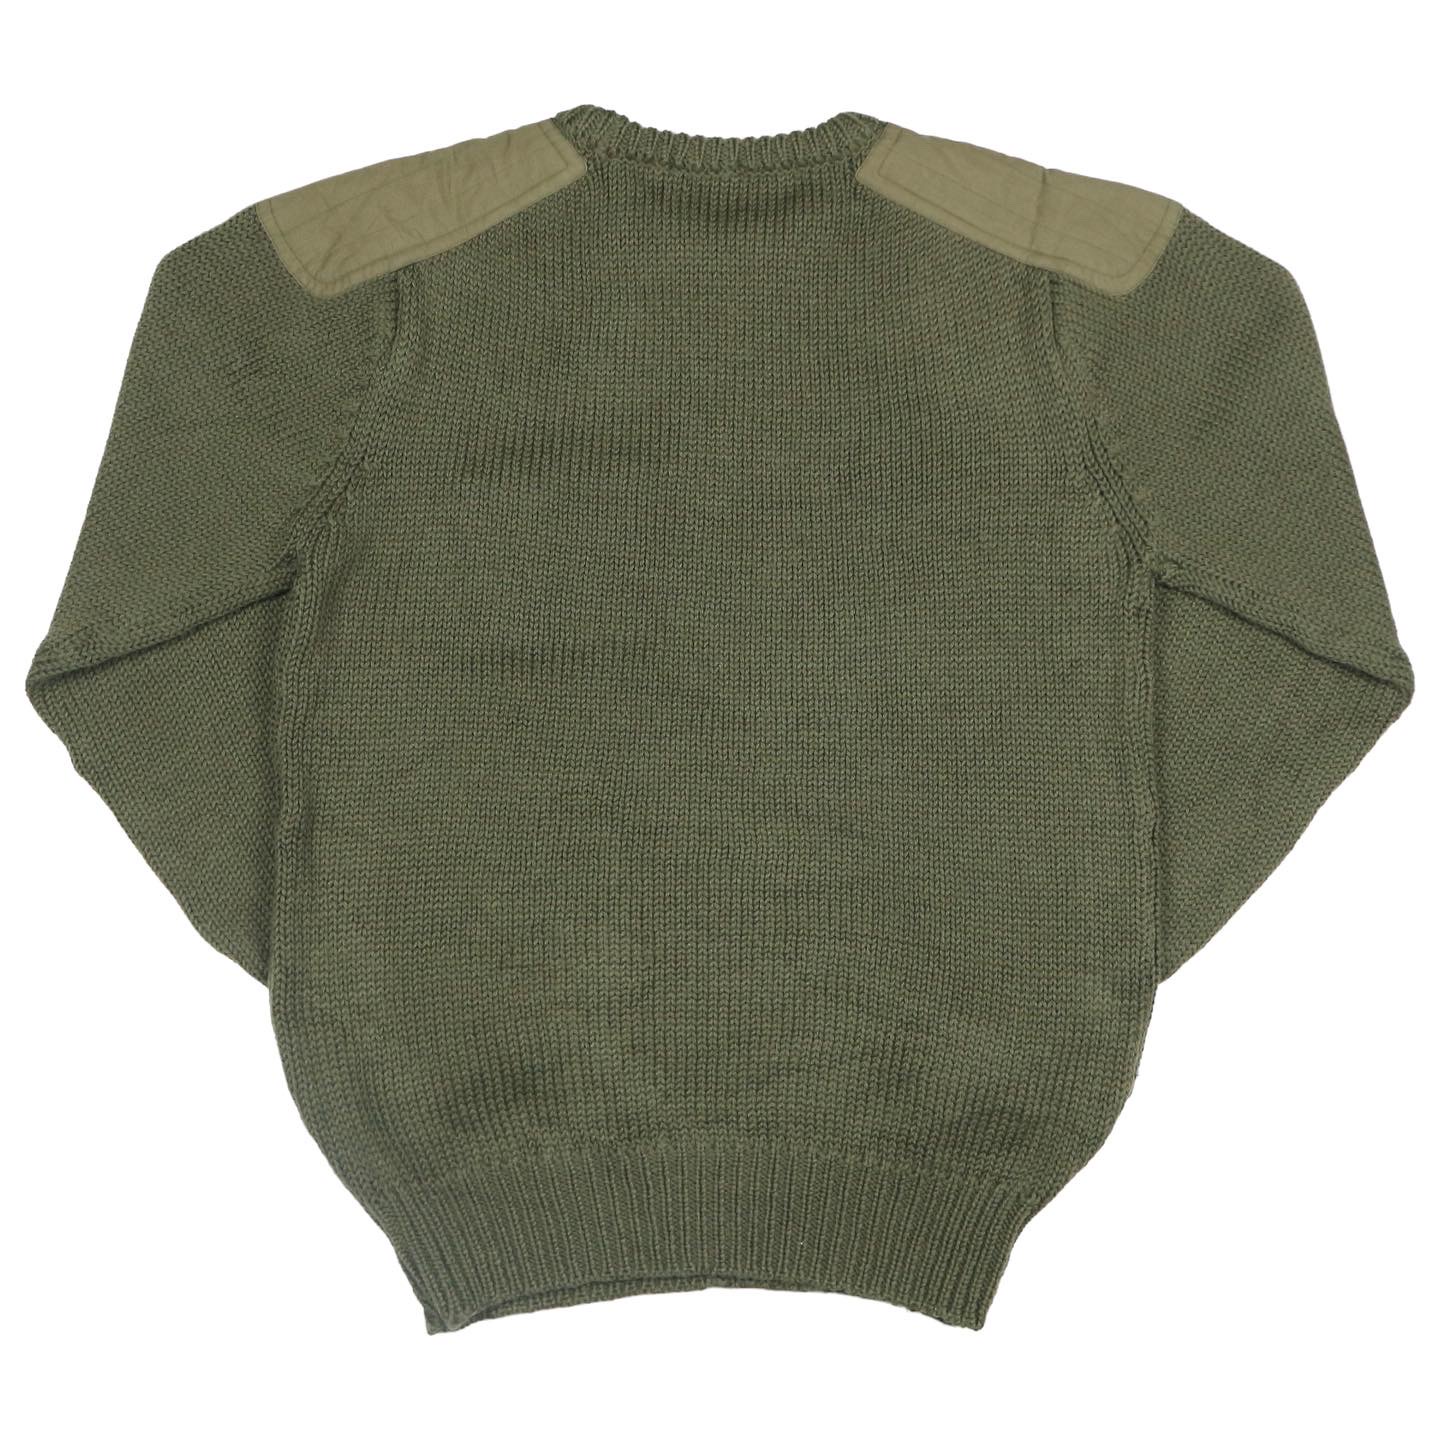 McGregor Army Combat Sweater Size L